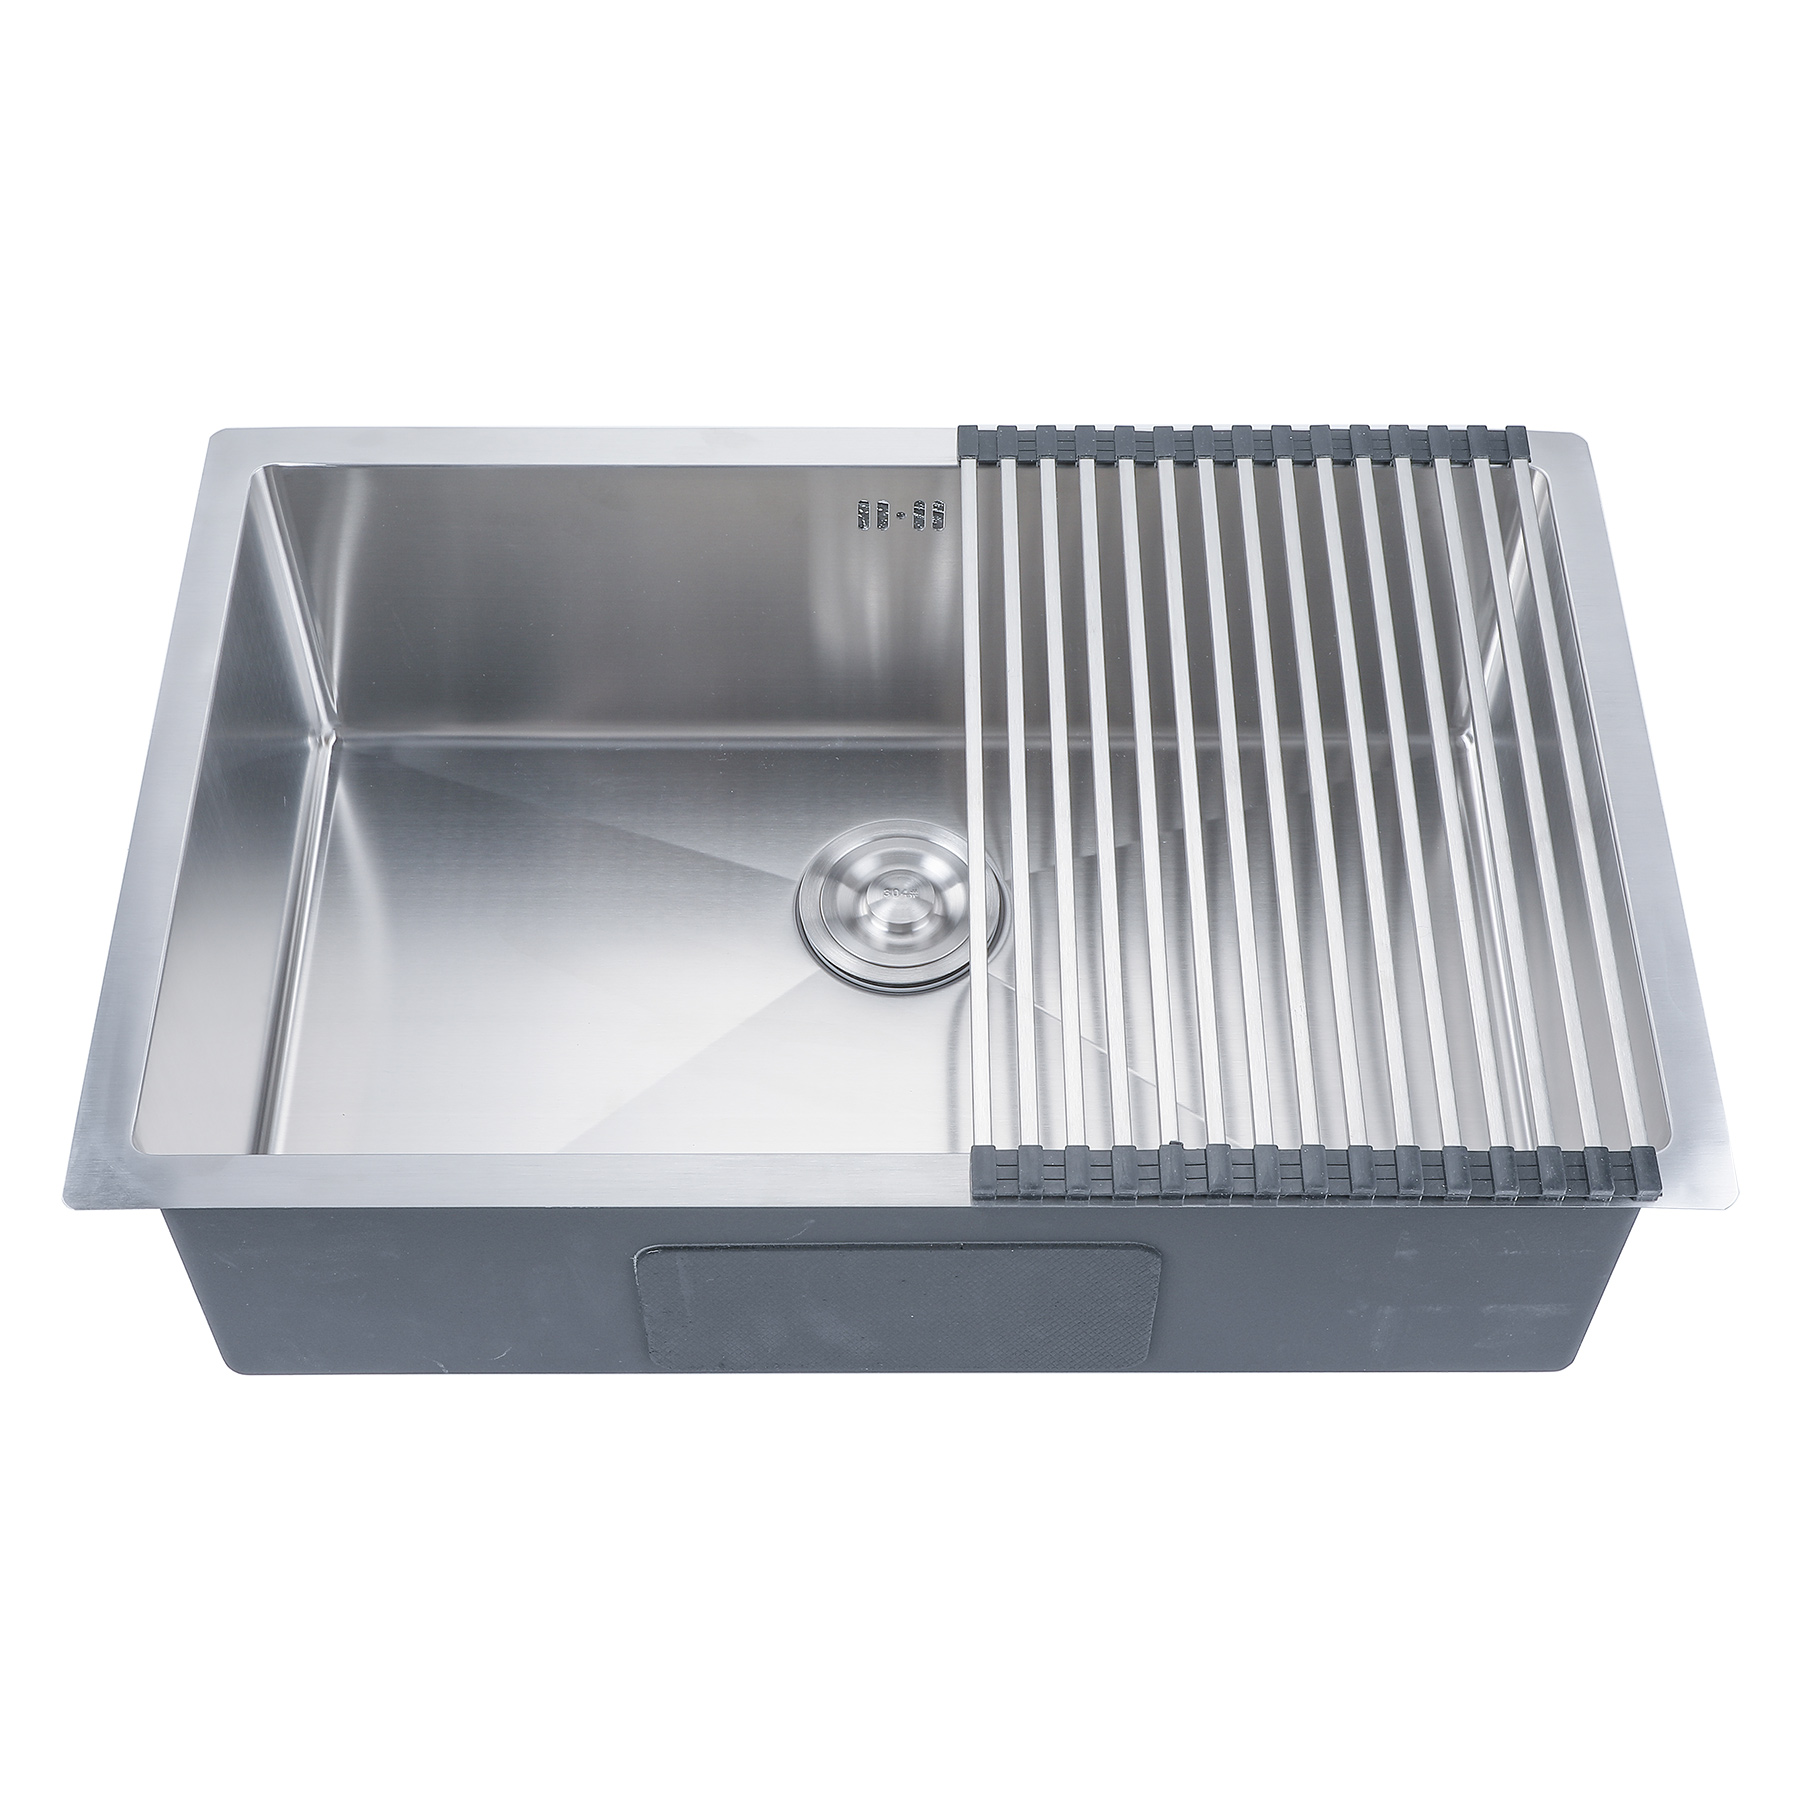 18 Gauge Kitchen Sink Undermount Single Bowl Stainless Steel - image 2 of 7